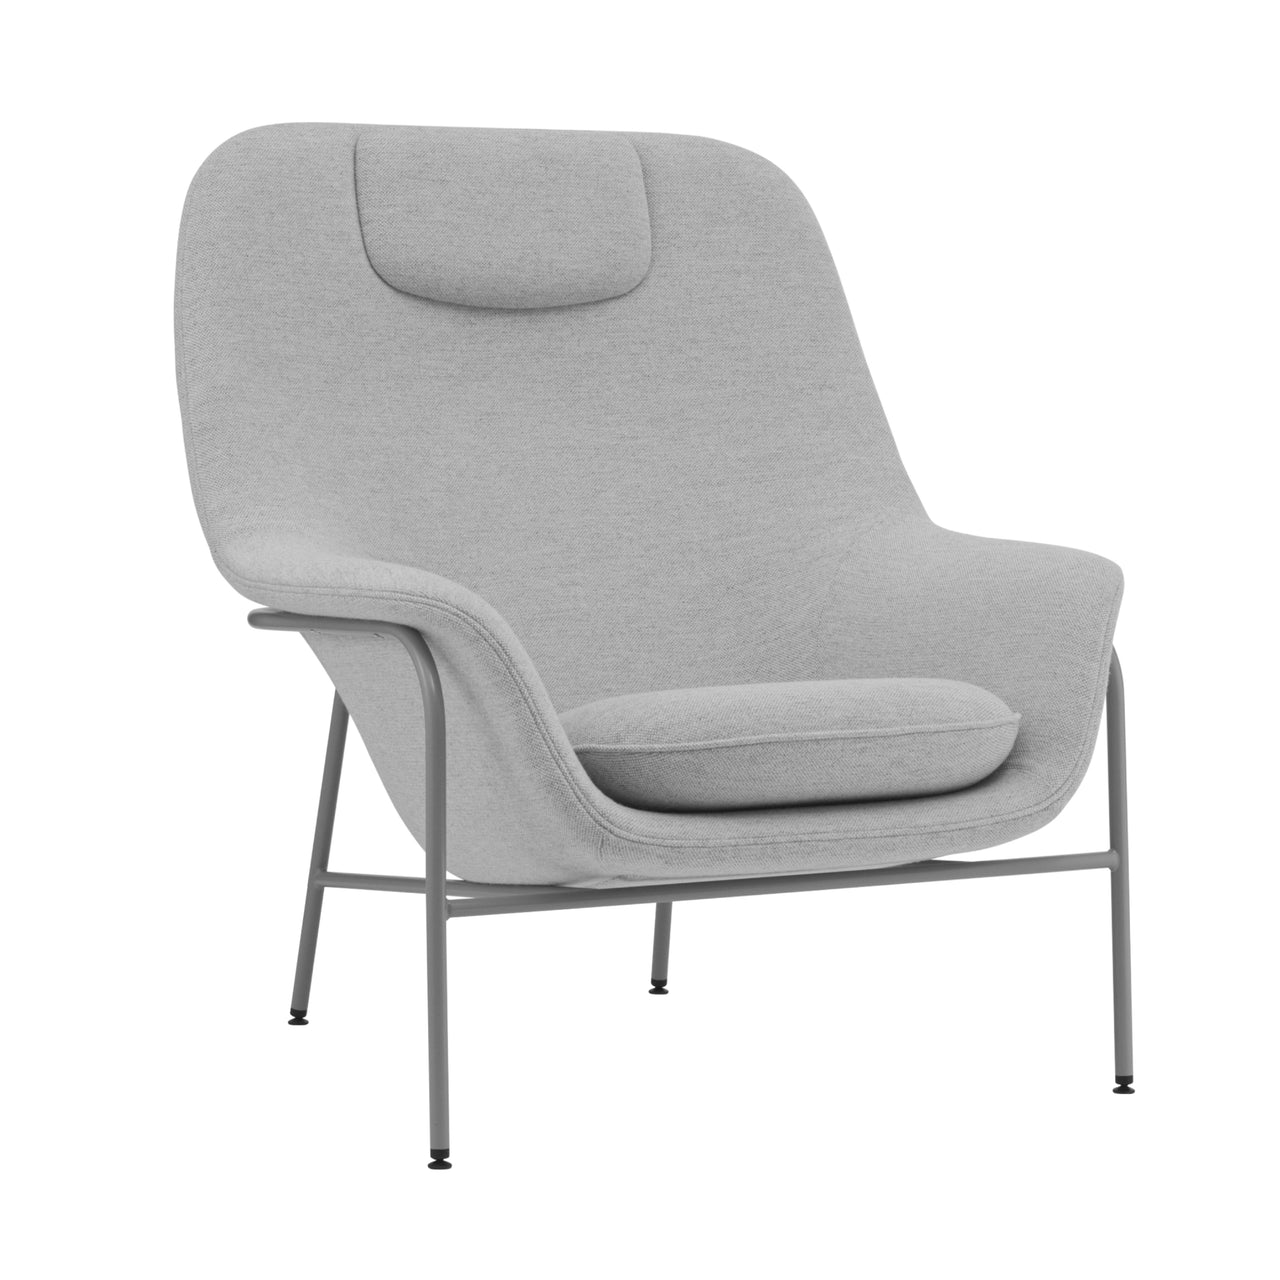 Drape Lounge Chair: High + Steel Base + With Headrest + Grey